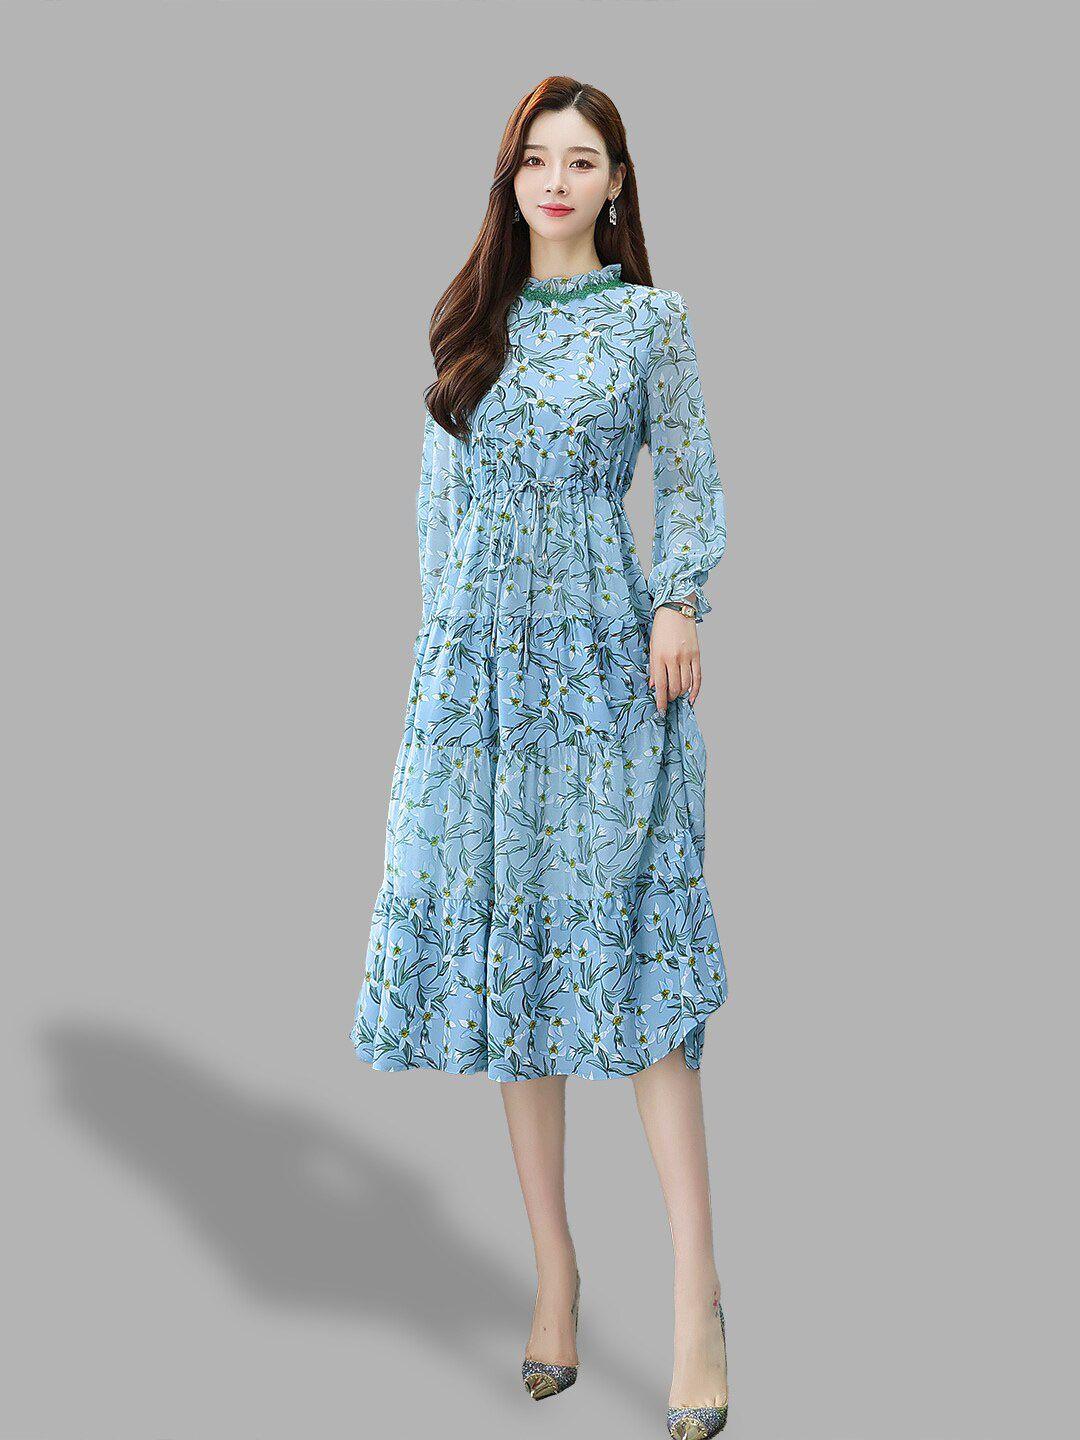 jc collection women blue floral midi dress